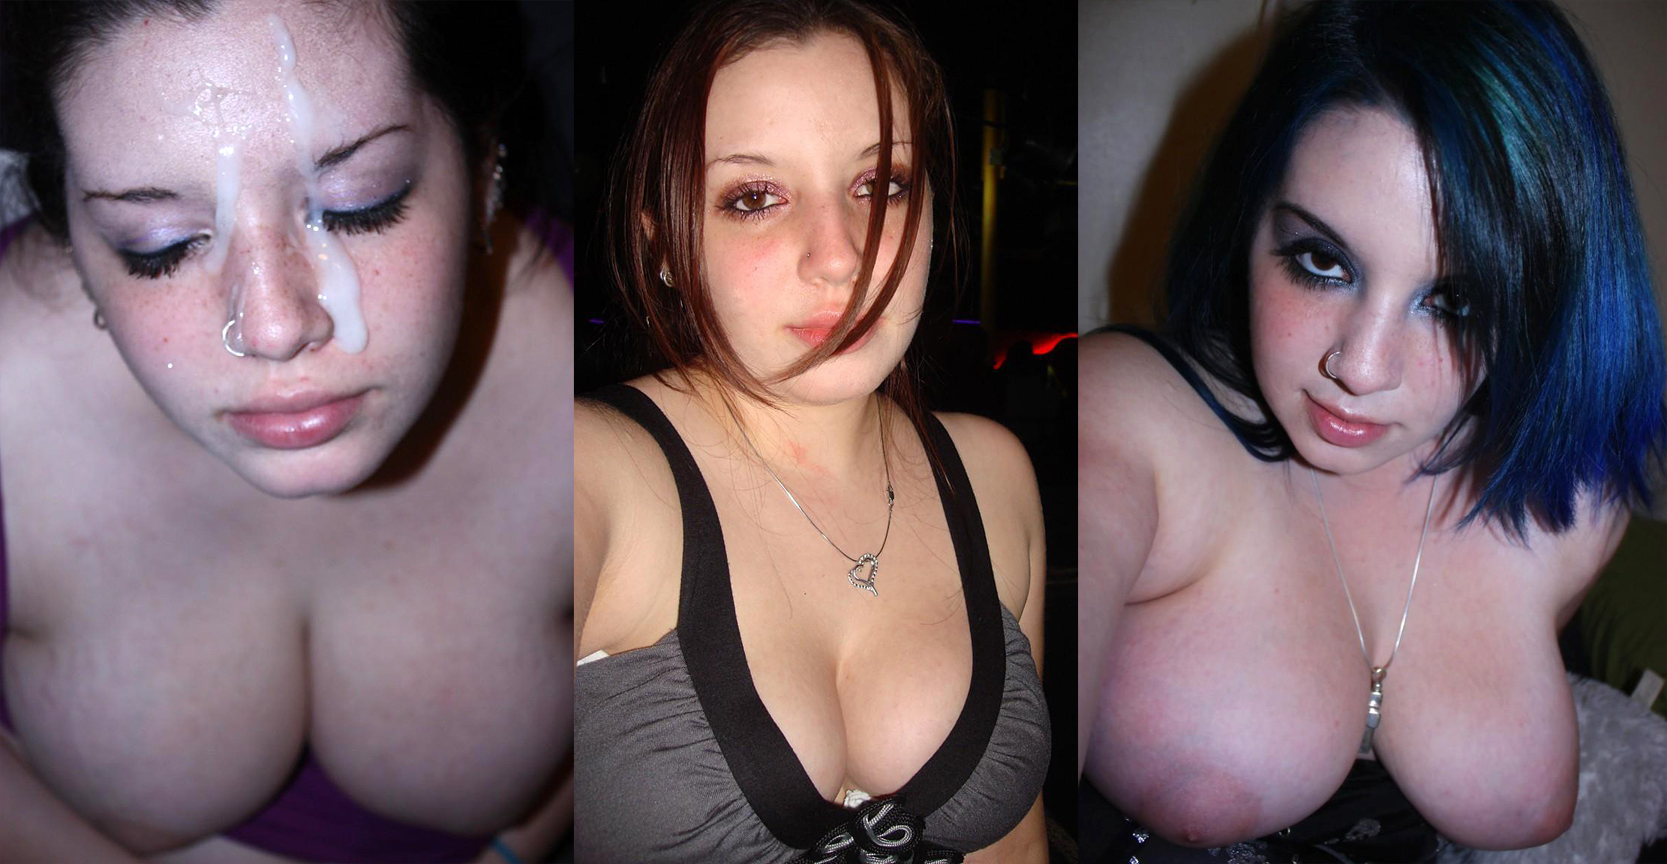 Before / After facial cumshot